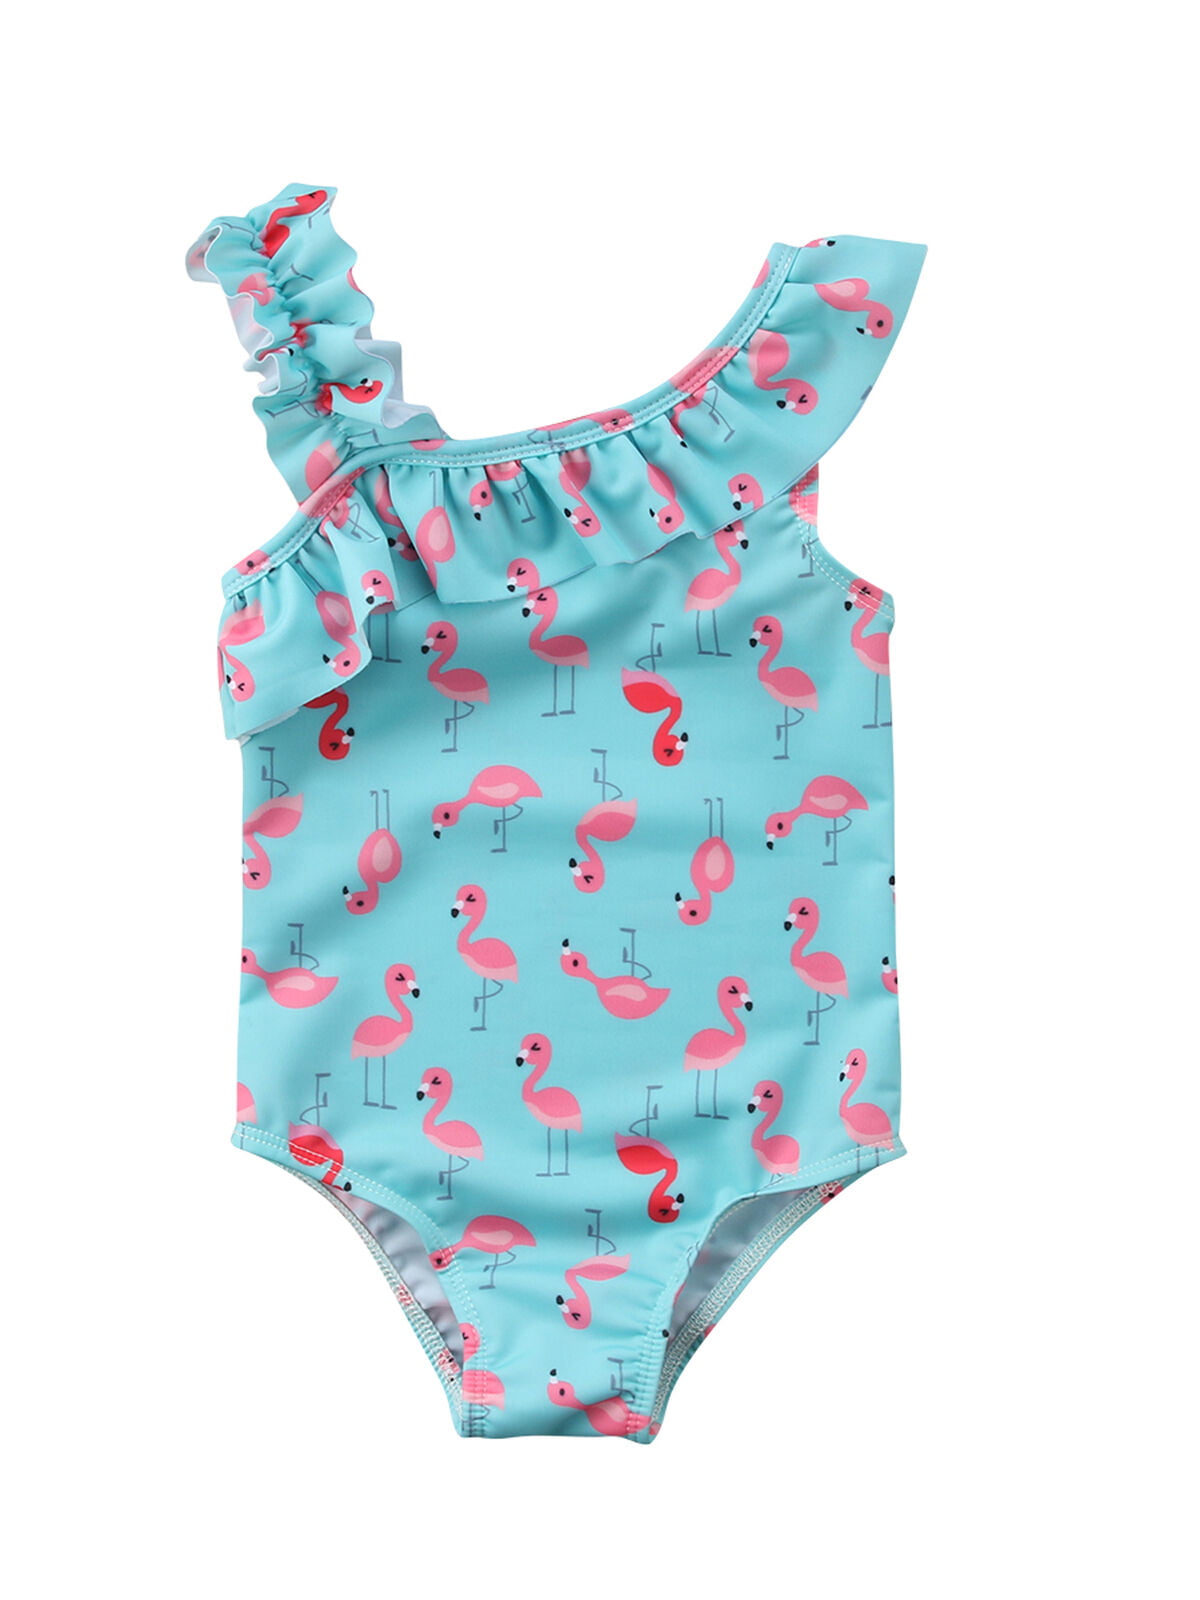 NEW Girls Blue Flamingo Ruffle Swimsuit Bathing Suit 2T 3T 4T 5T 6 